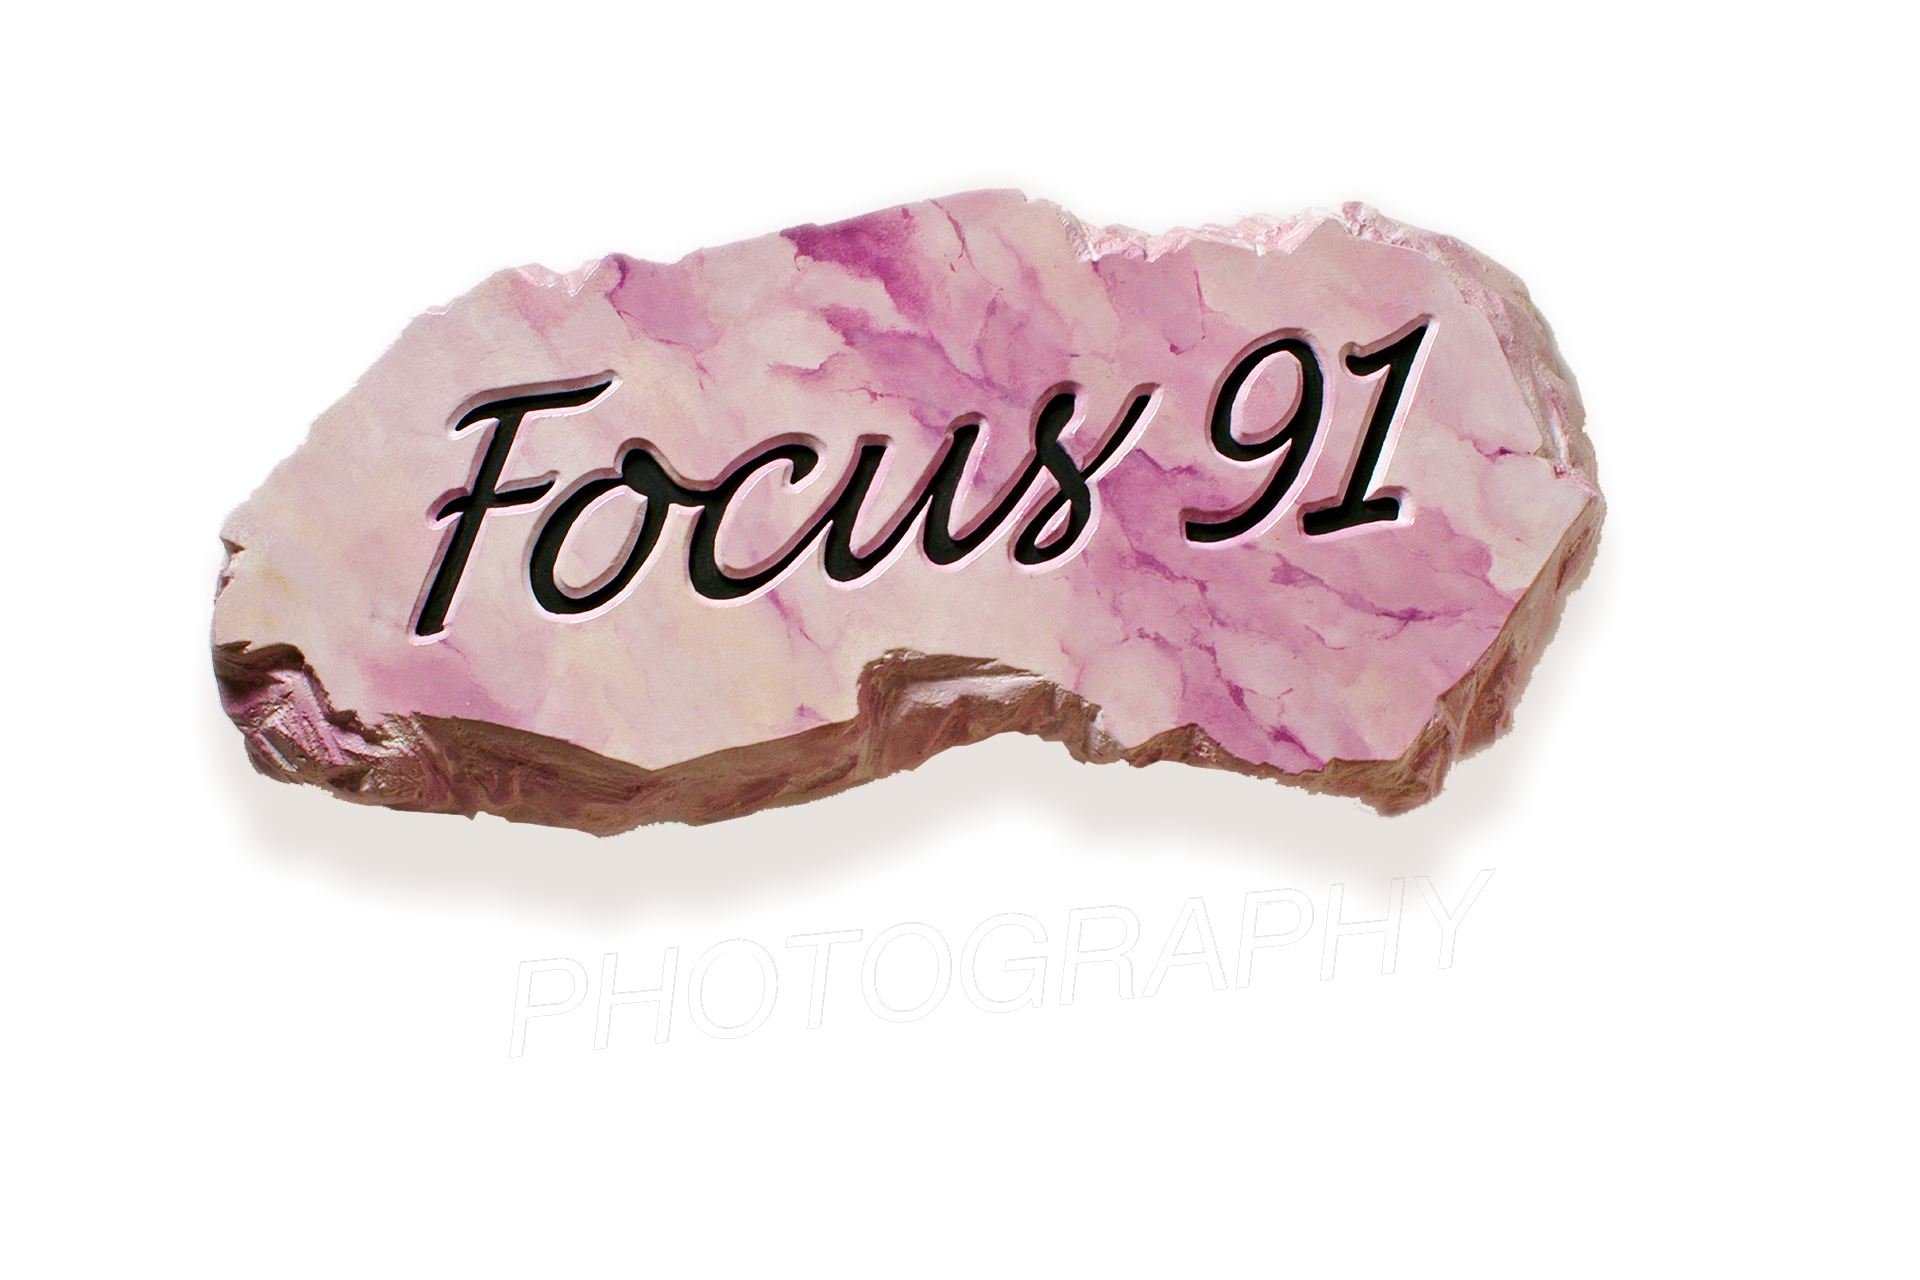 Focus ‘91 Photography